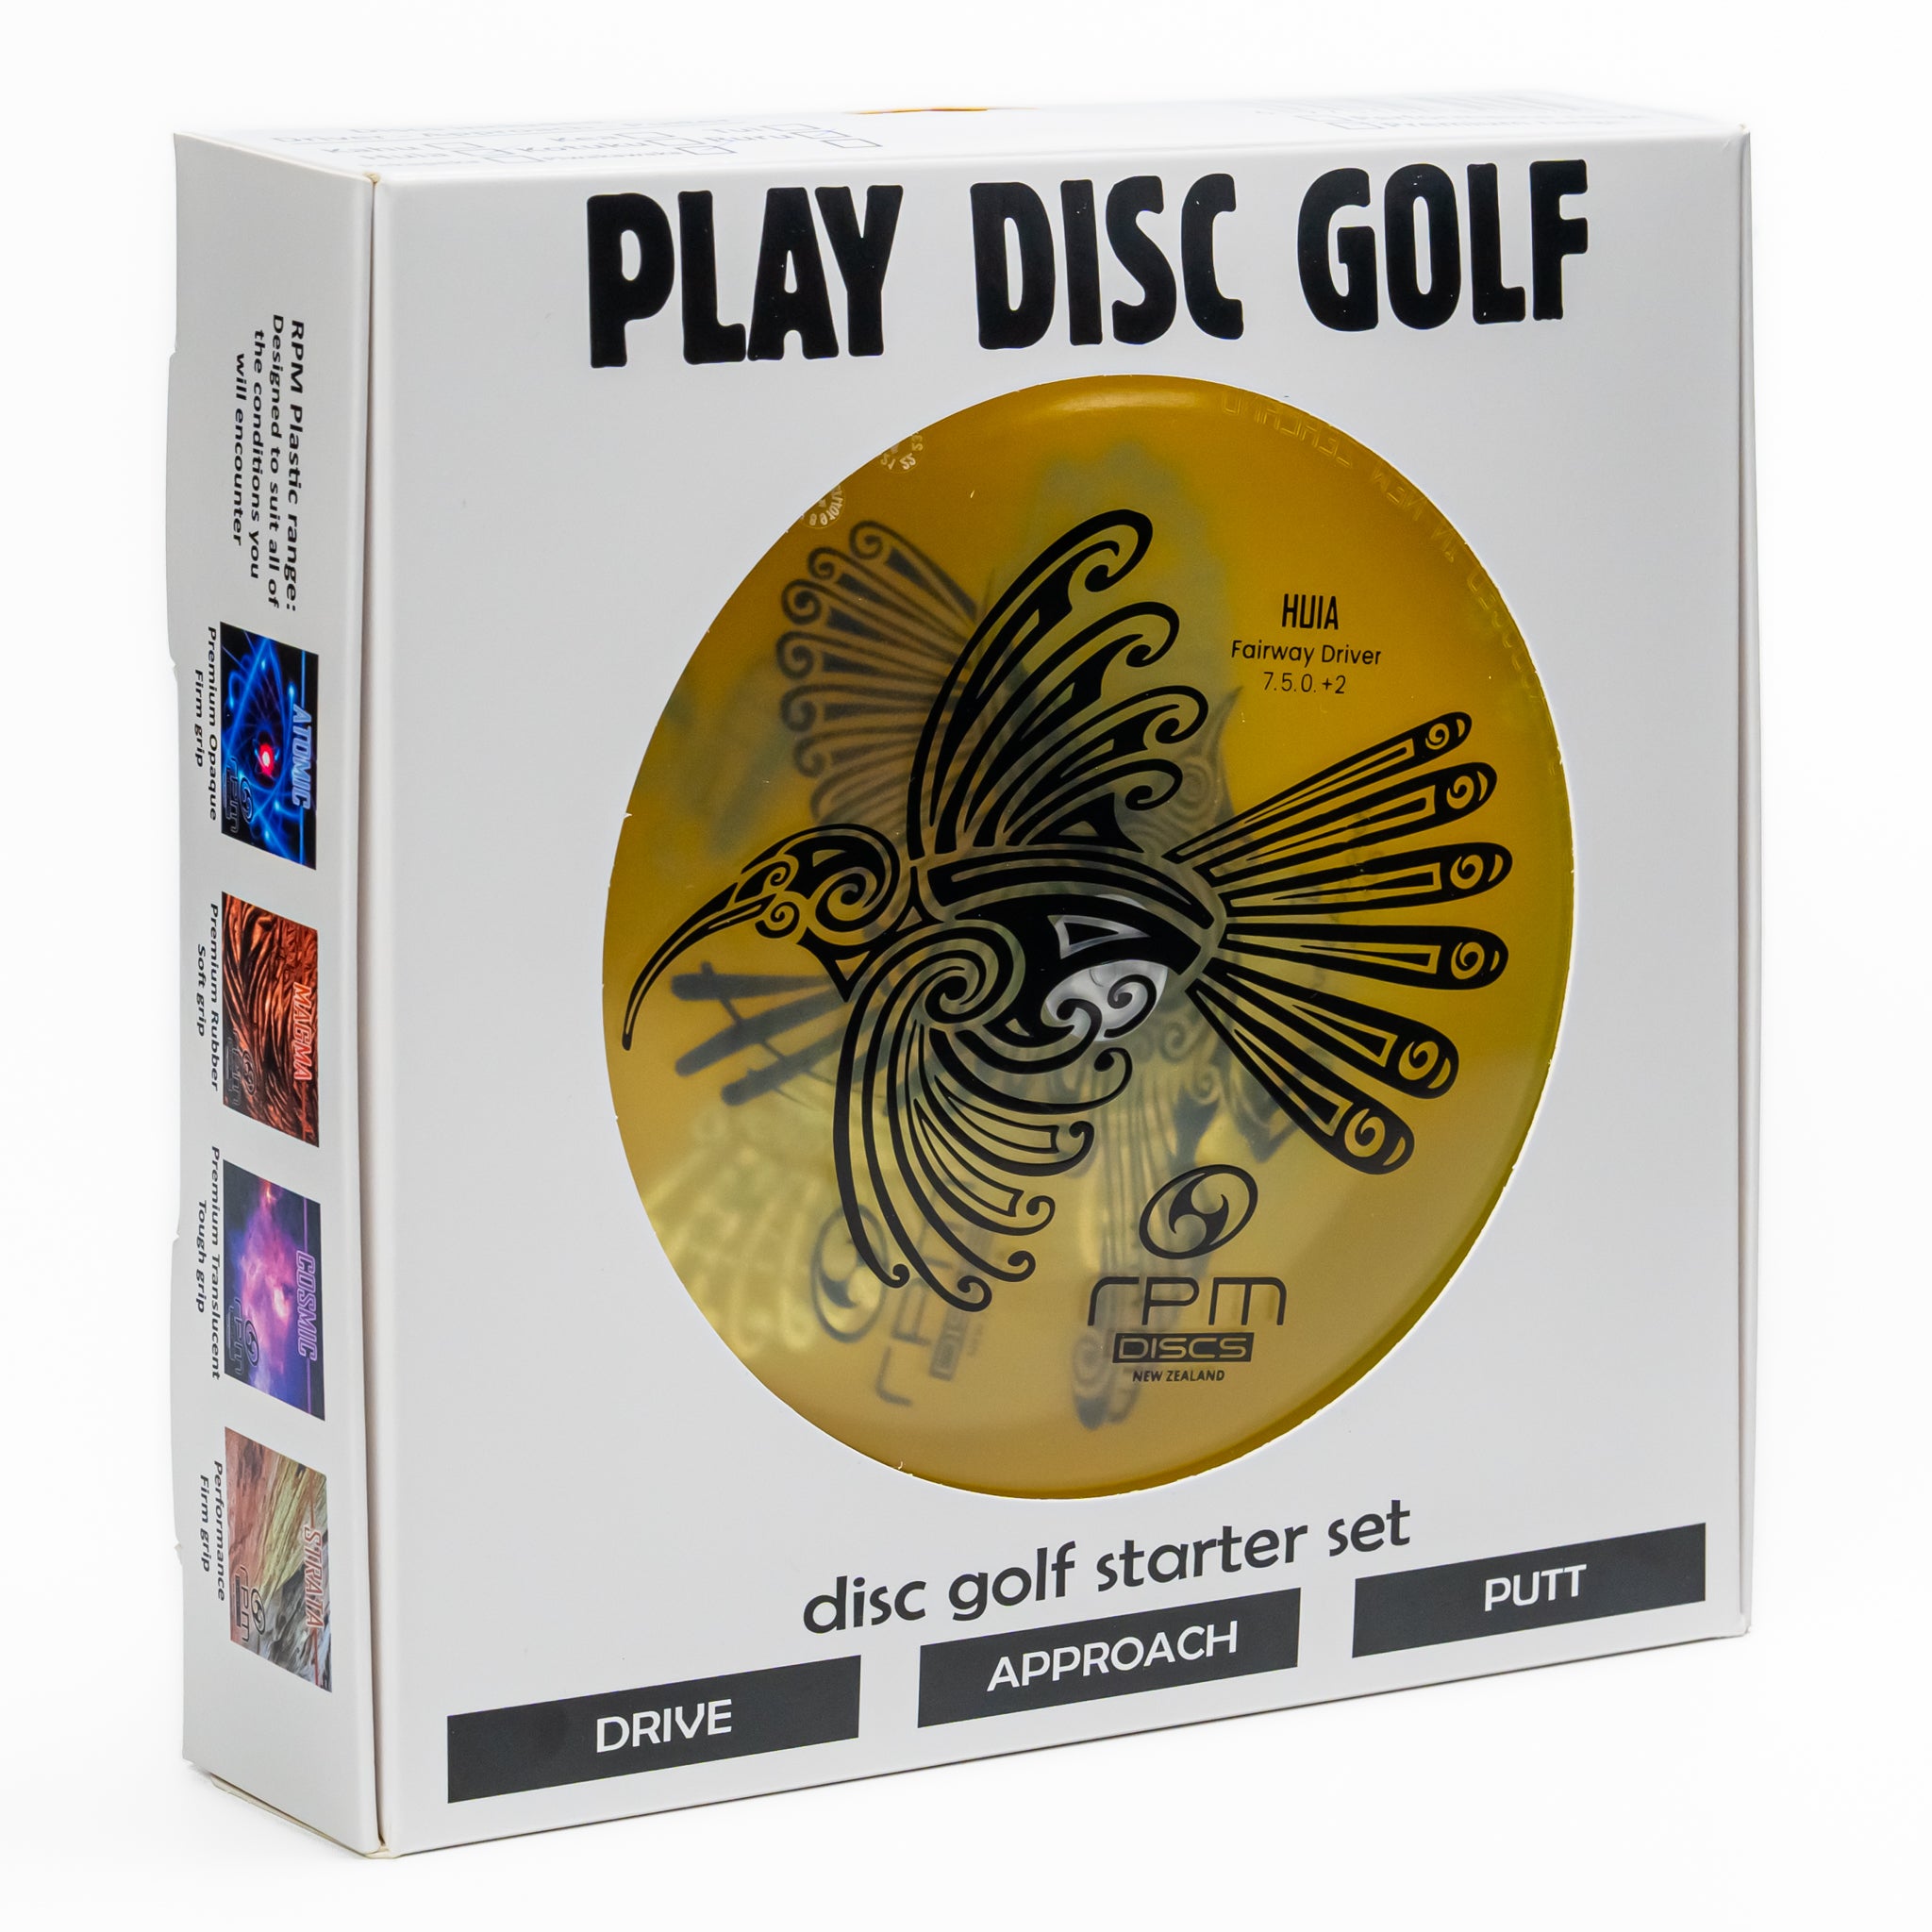 RPM Discs disc golf starter set with a Huia